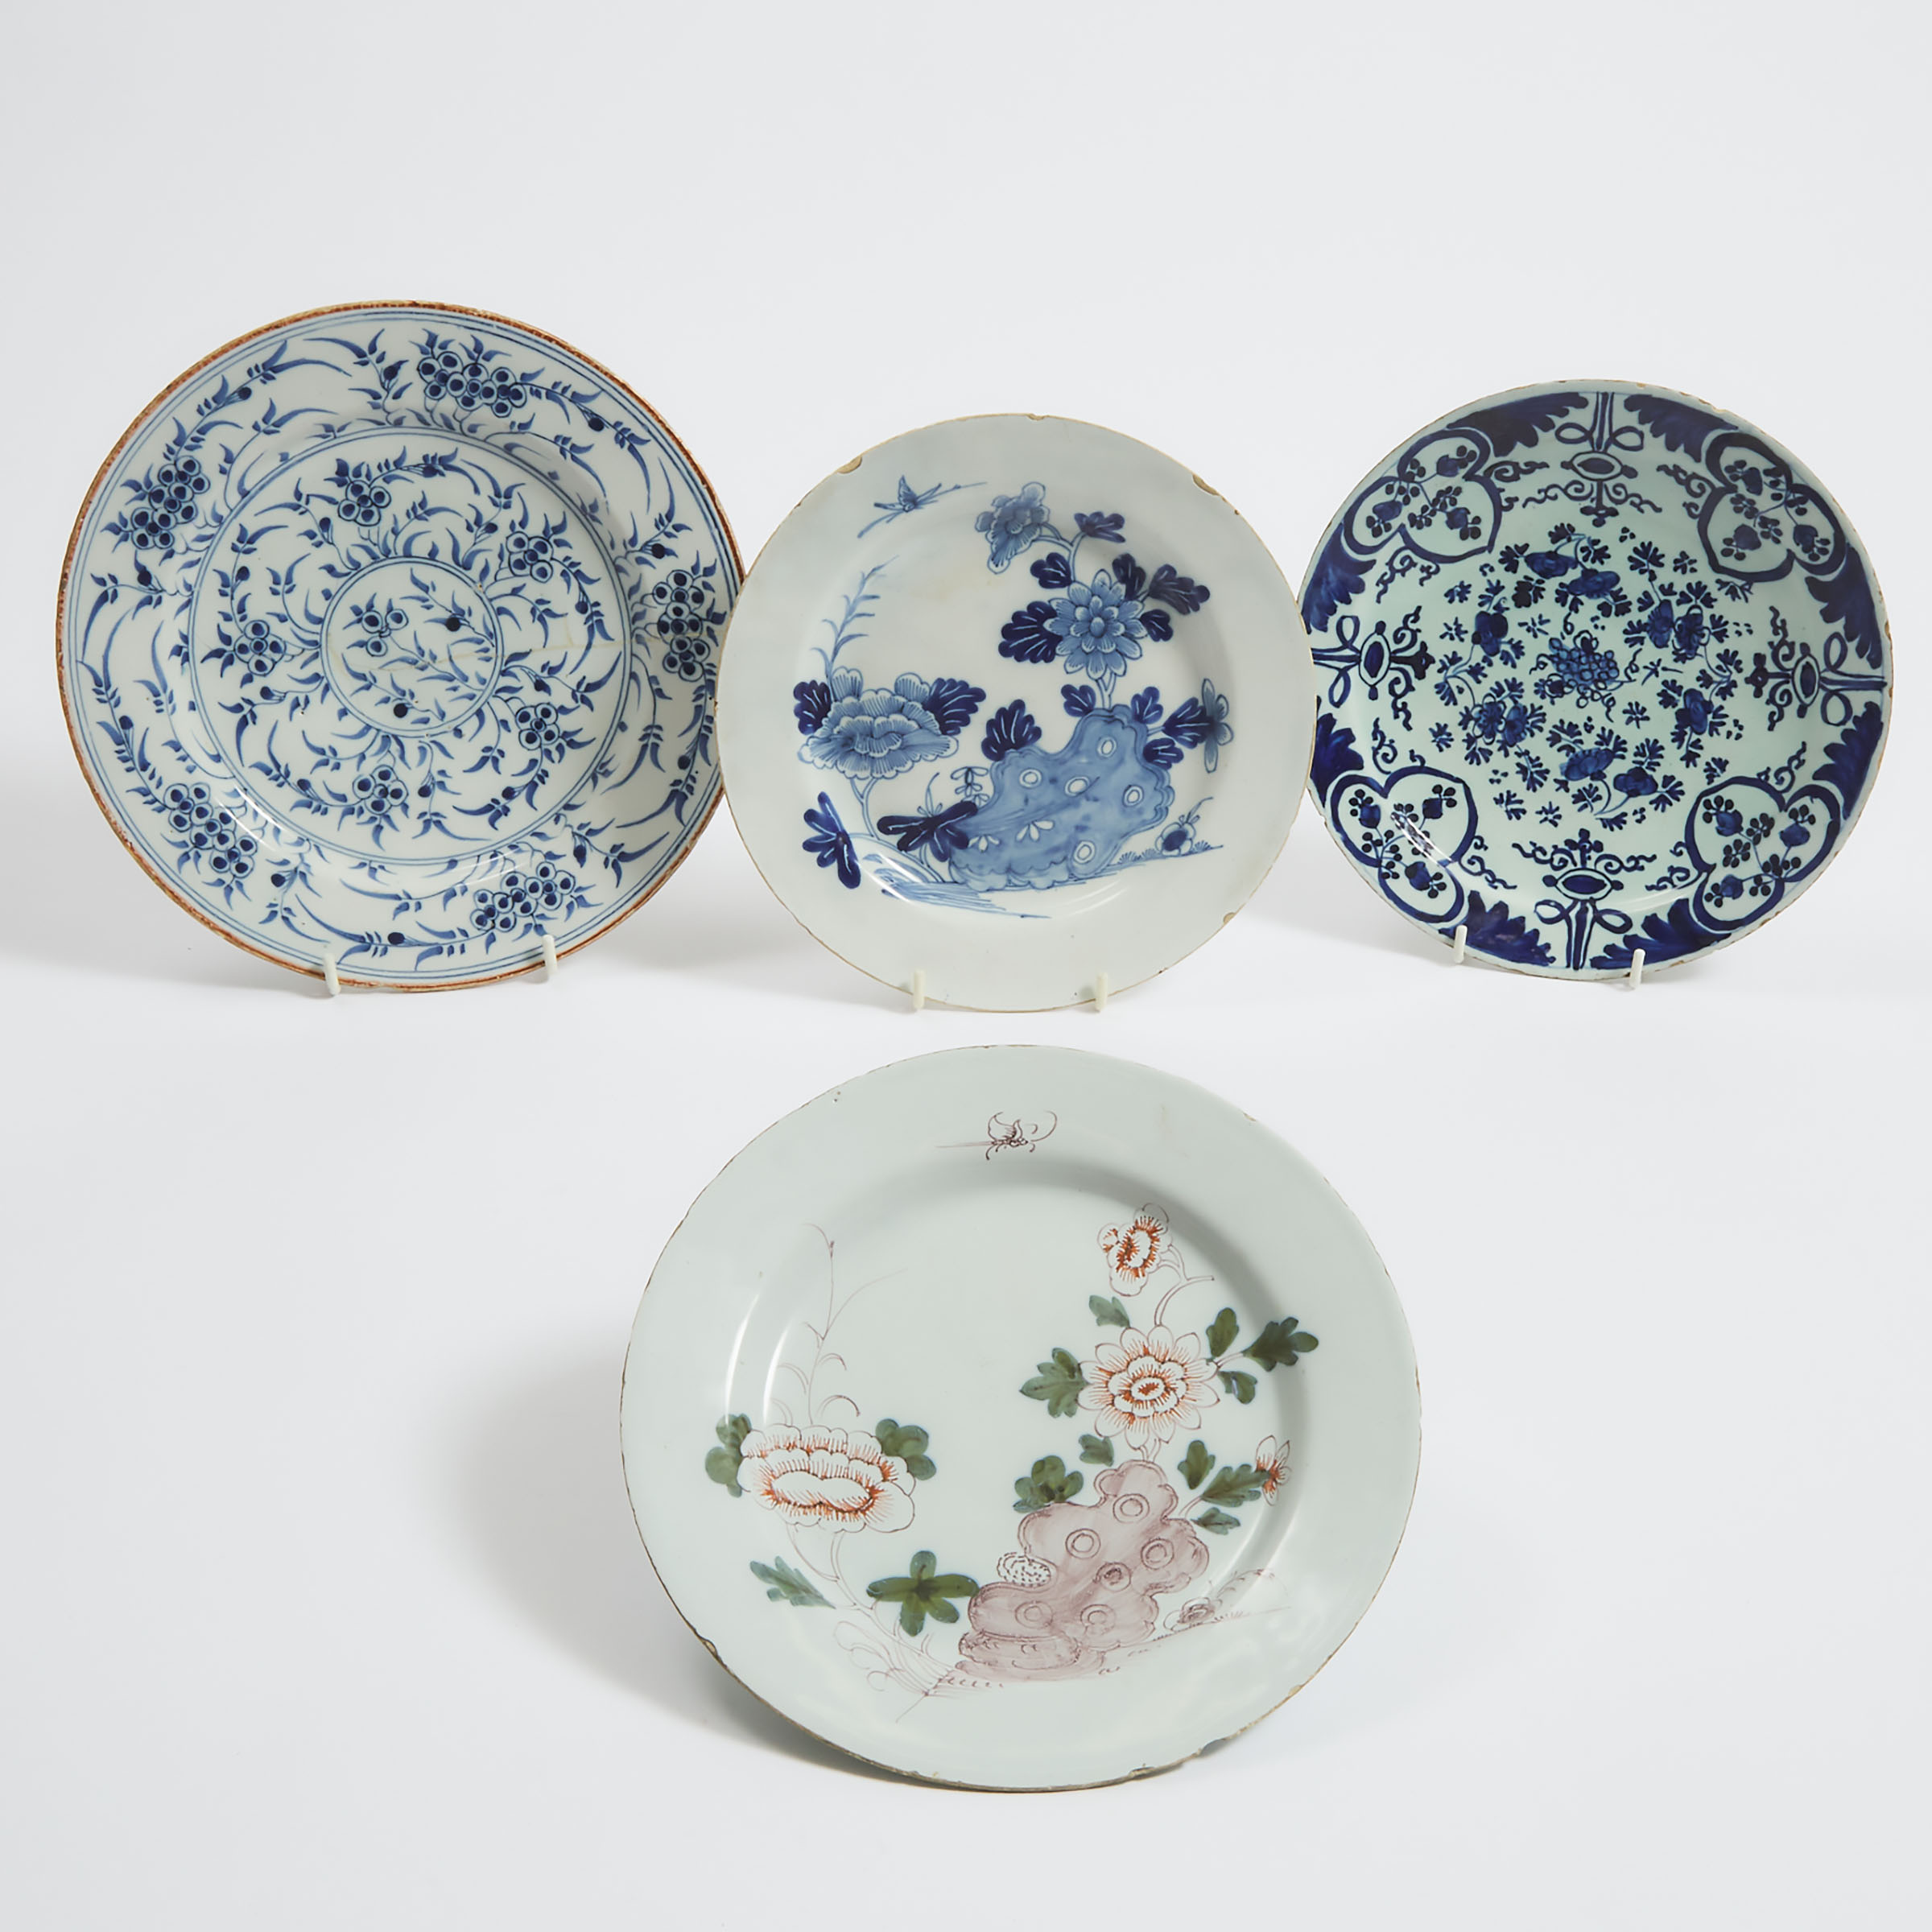 Four English Delft Plates, 18th century